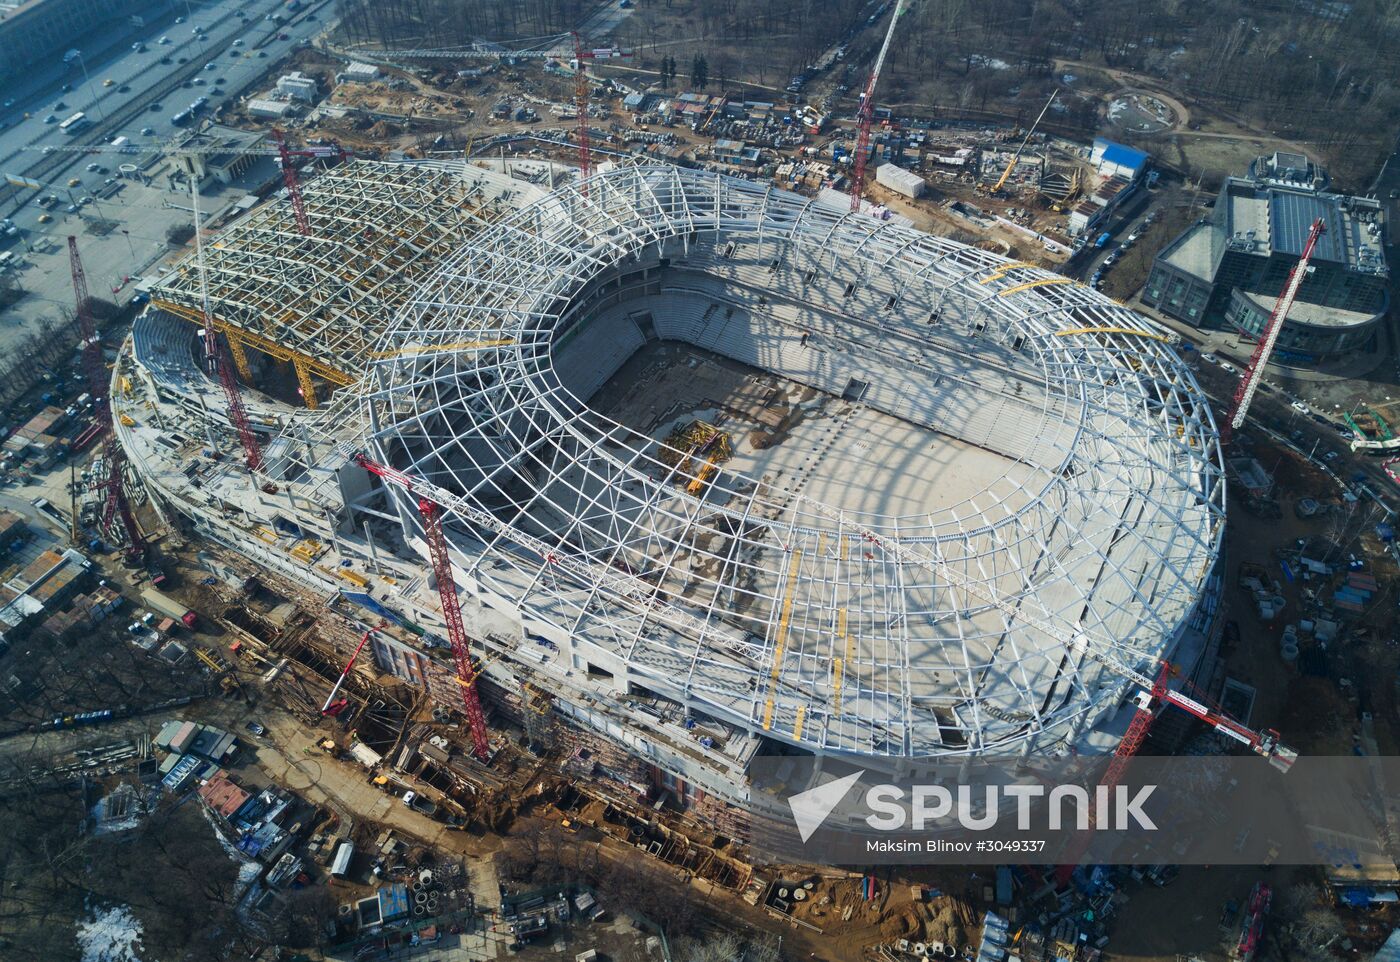 Dynamo stadium under construction